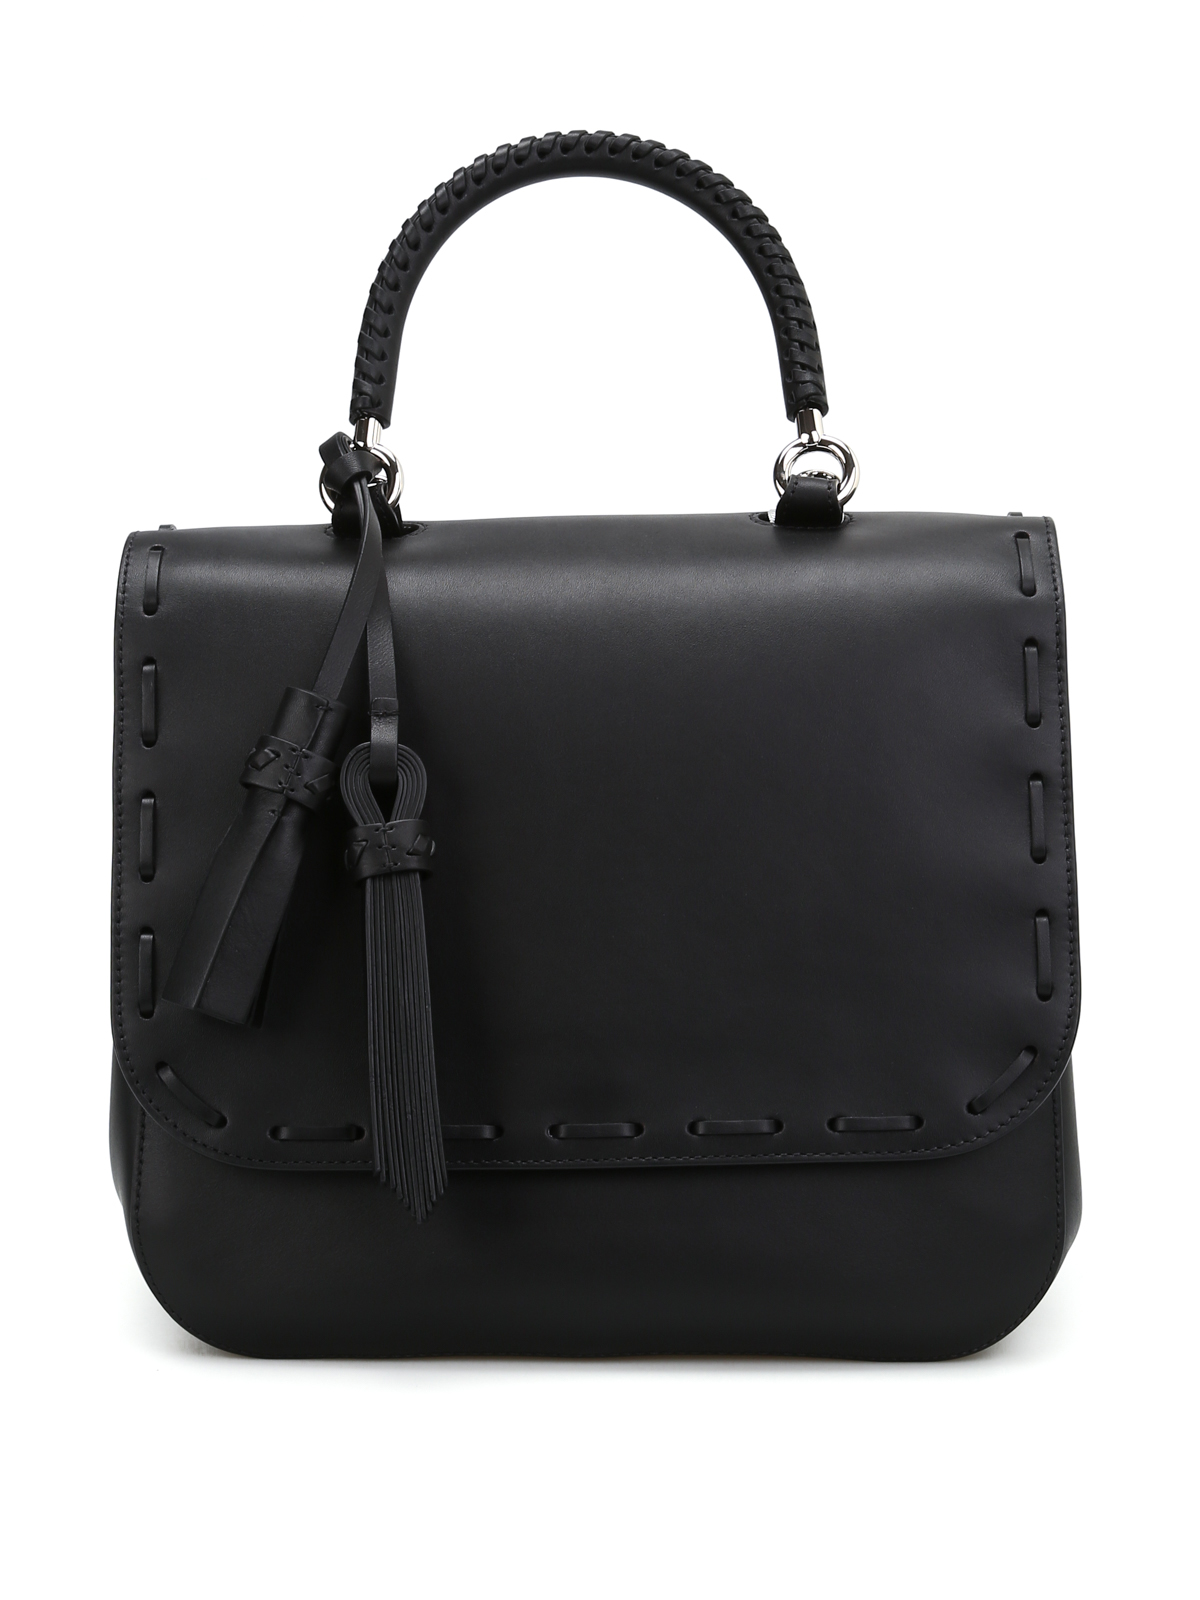 Max Mara - Black leather hand bag - totes bags - 45110178000215000